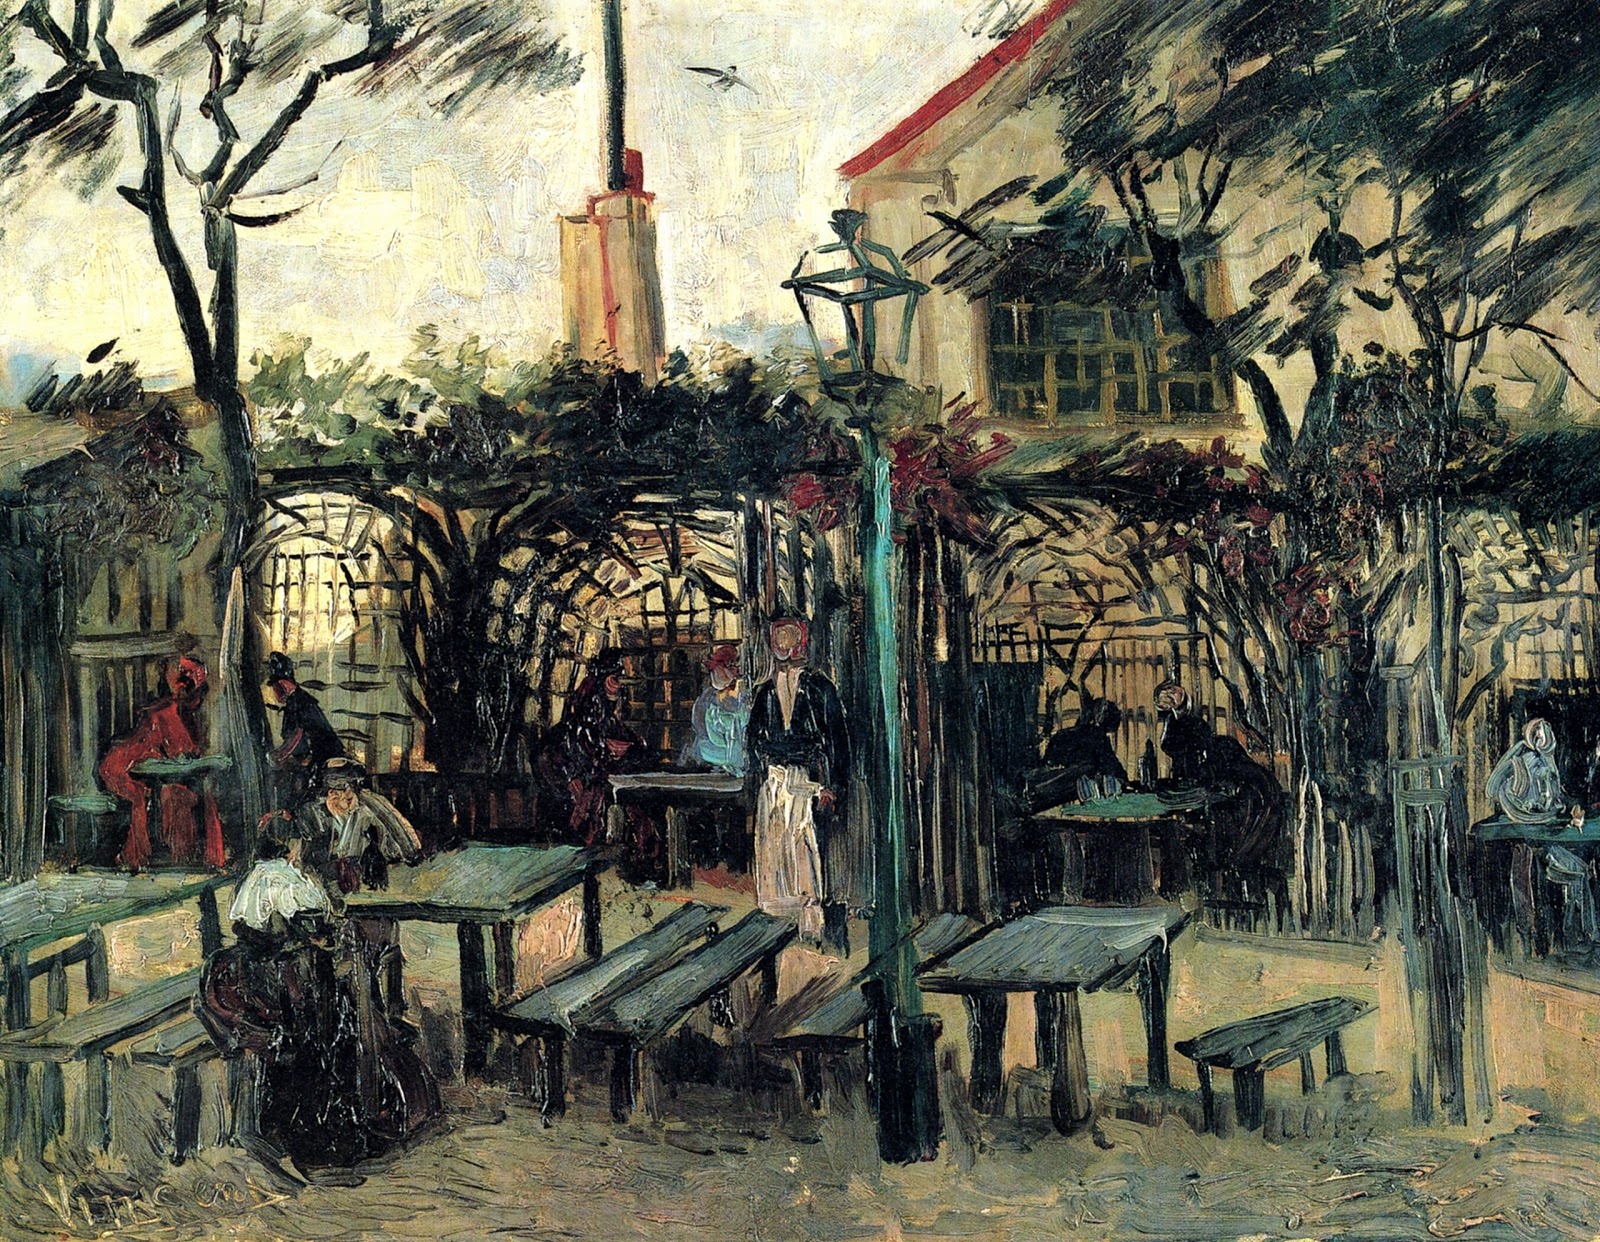 Vincent+Van+Gogh-1853-1890 (806).jpg